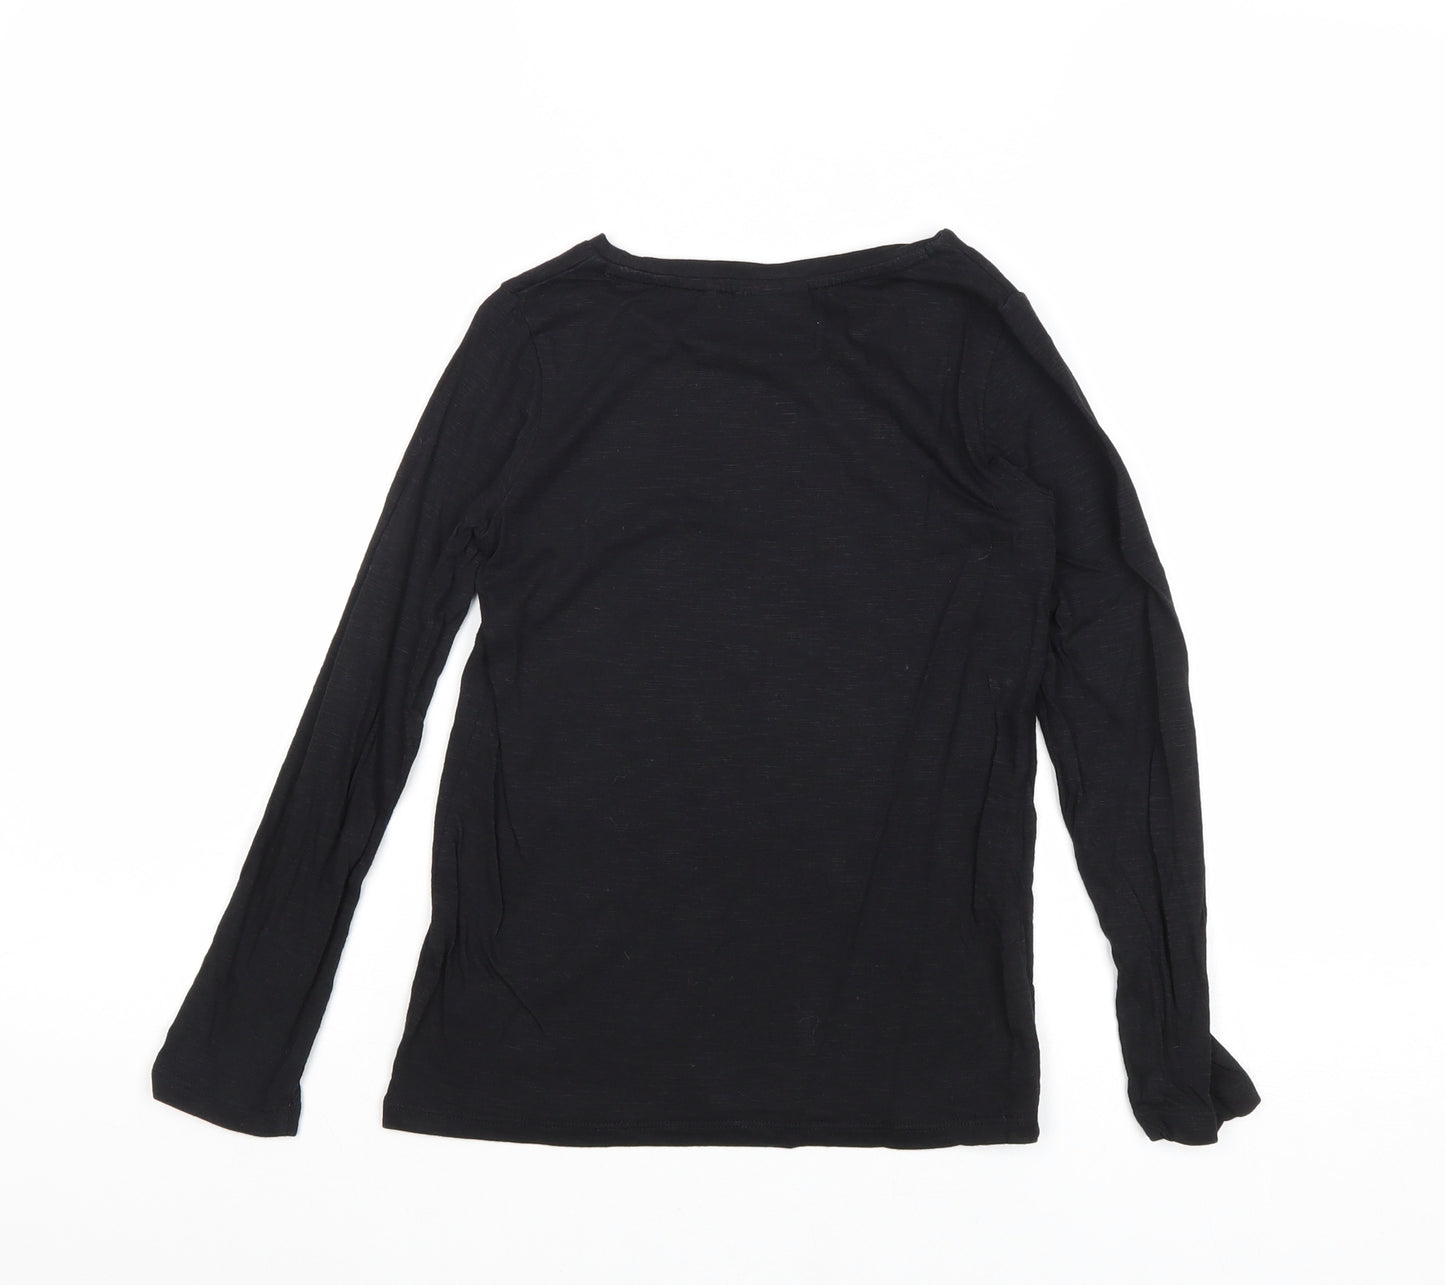 NEXT Girls Black Cotton Basic T-Shirt Size 7 Years Round Neck Pullover - Heart Print